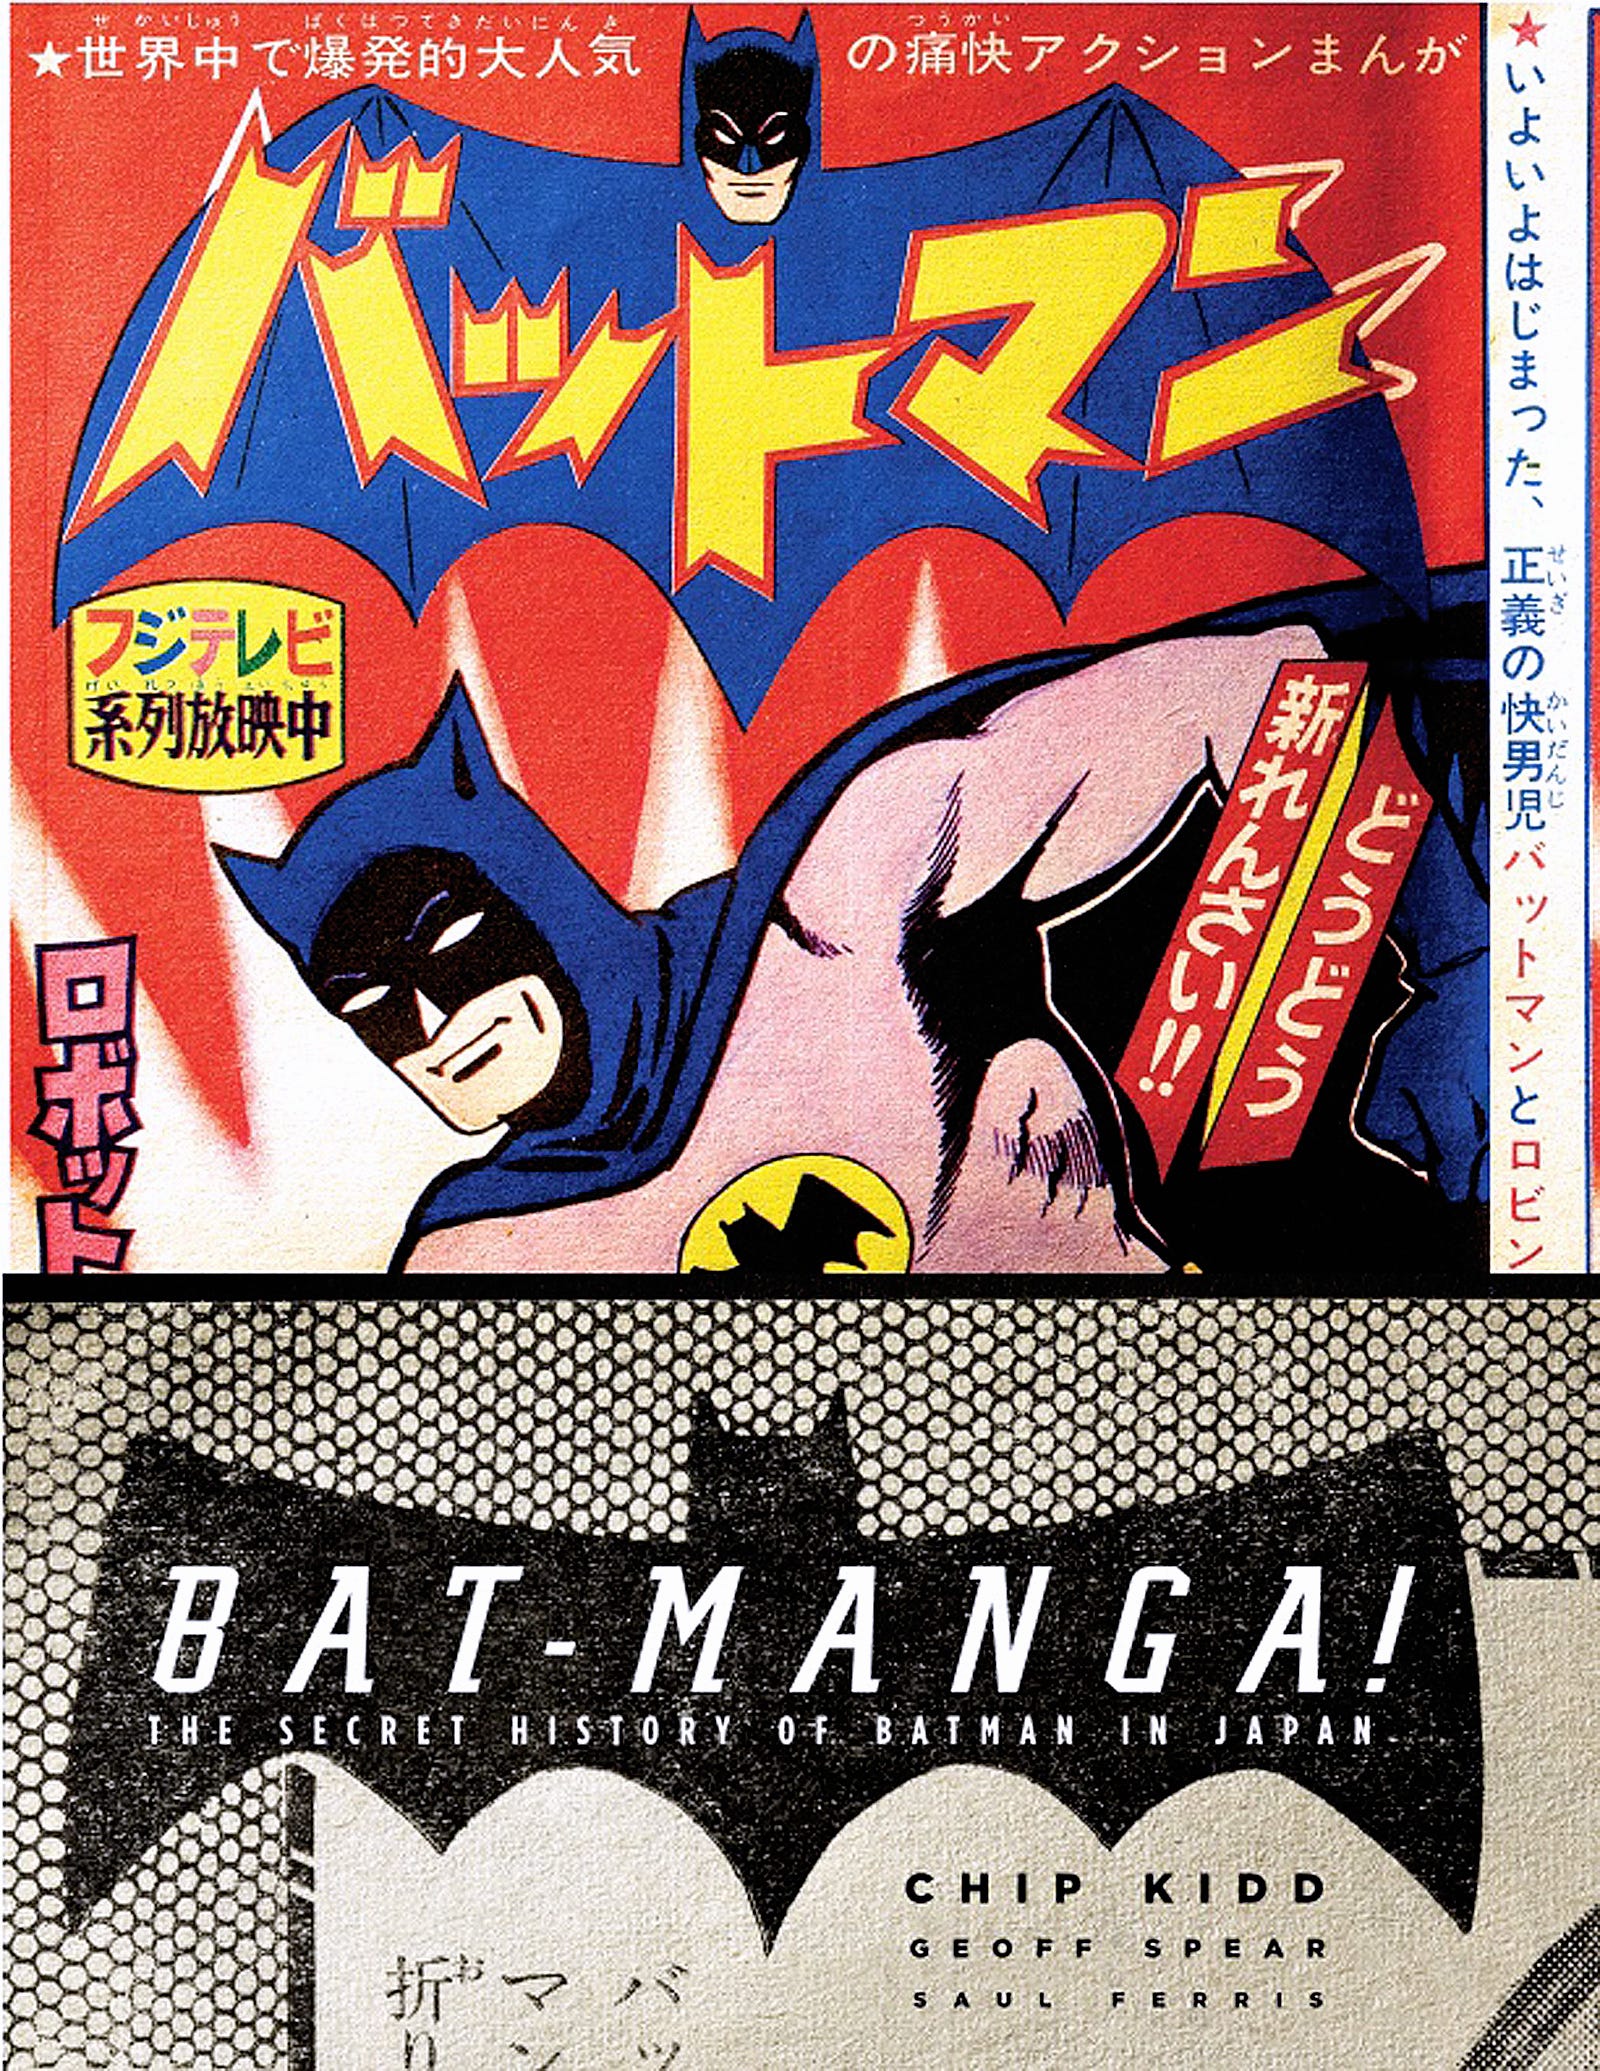 Batman's secret revealed in Manga